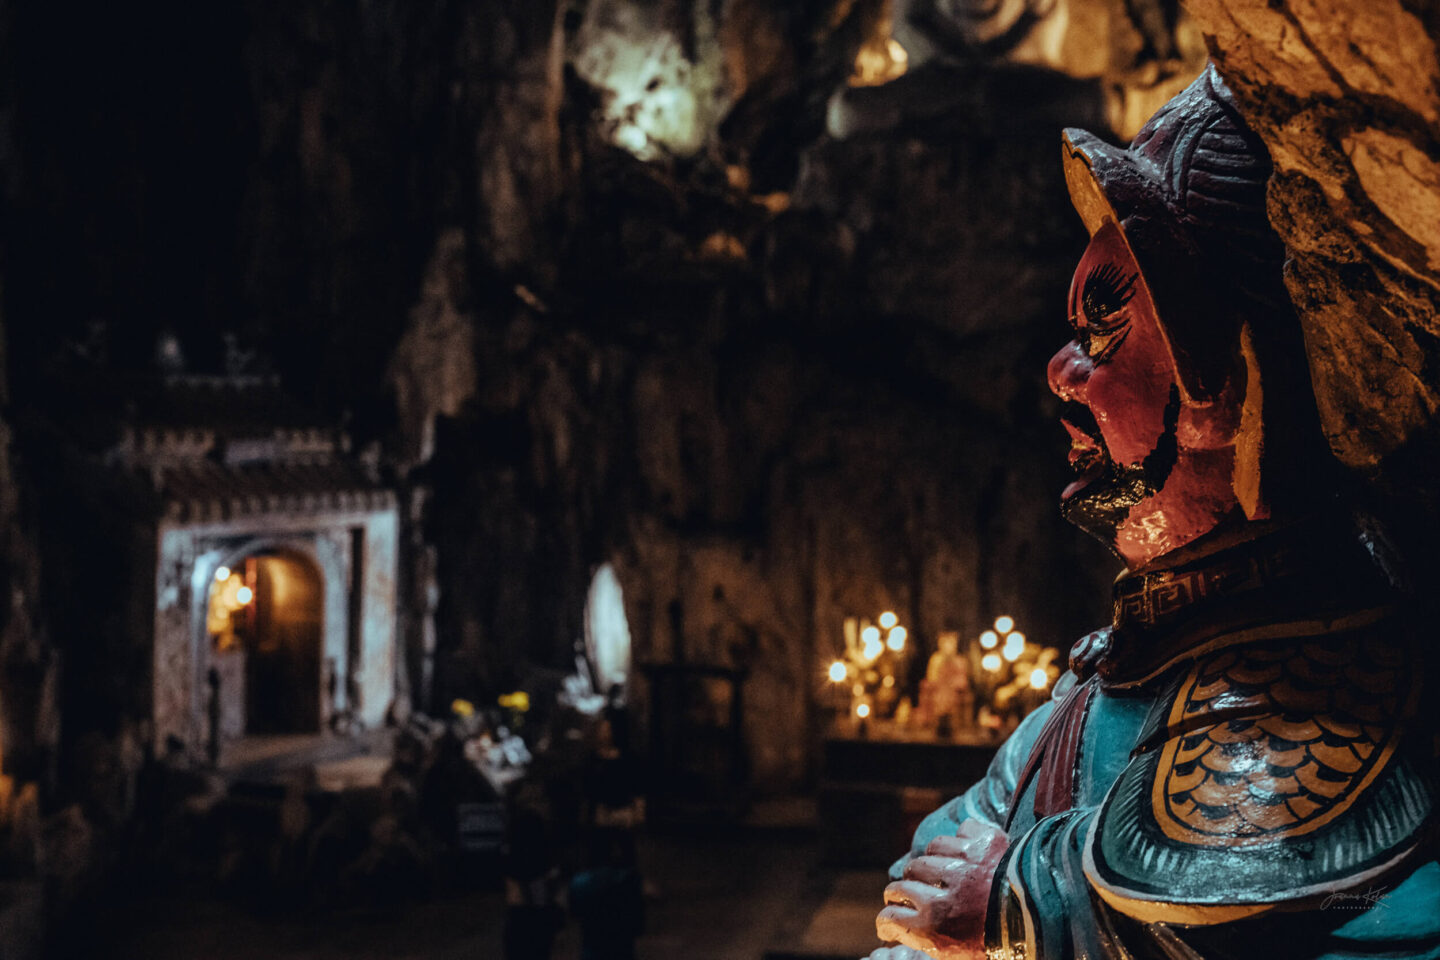 Vietnam, The many faces of Vietnam - photo essay